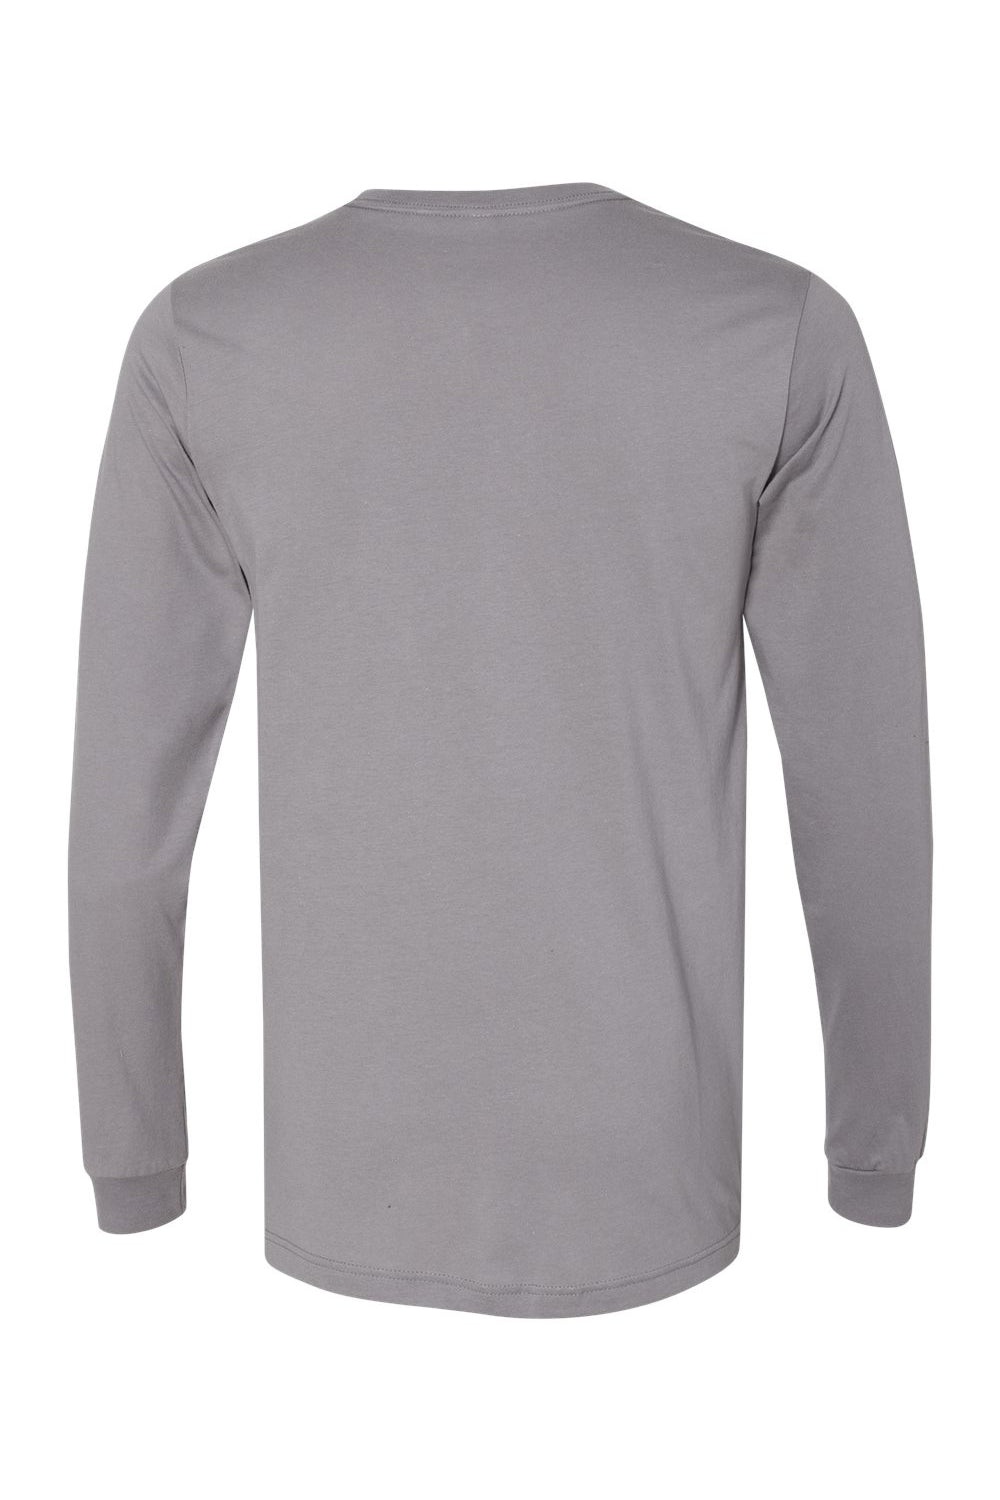 Bella + Canvas BC3501/3501 Mens Jersey Long Sleeve Crewneck T-Shirt Storm Grey Flat Back